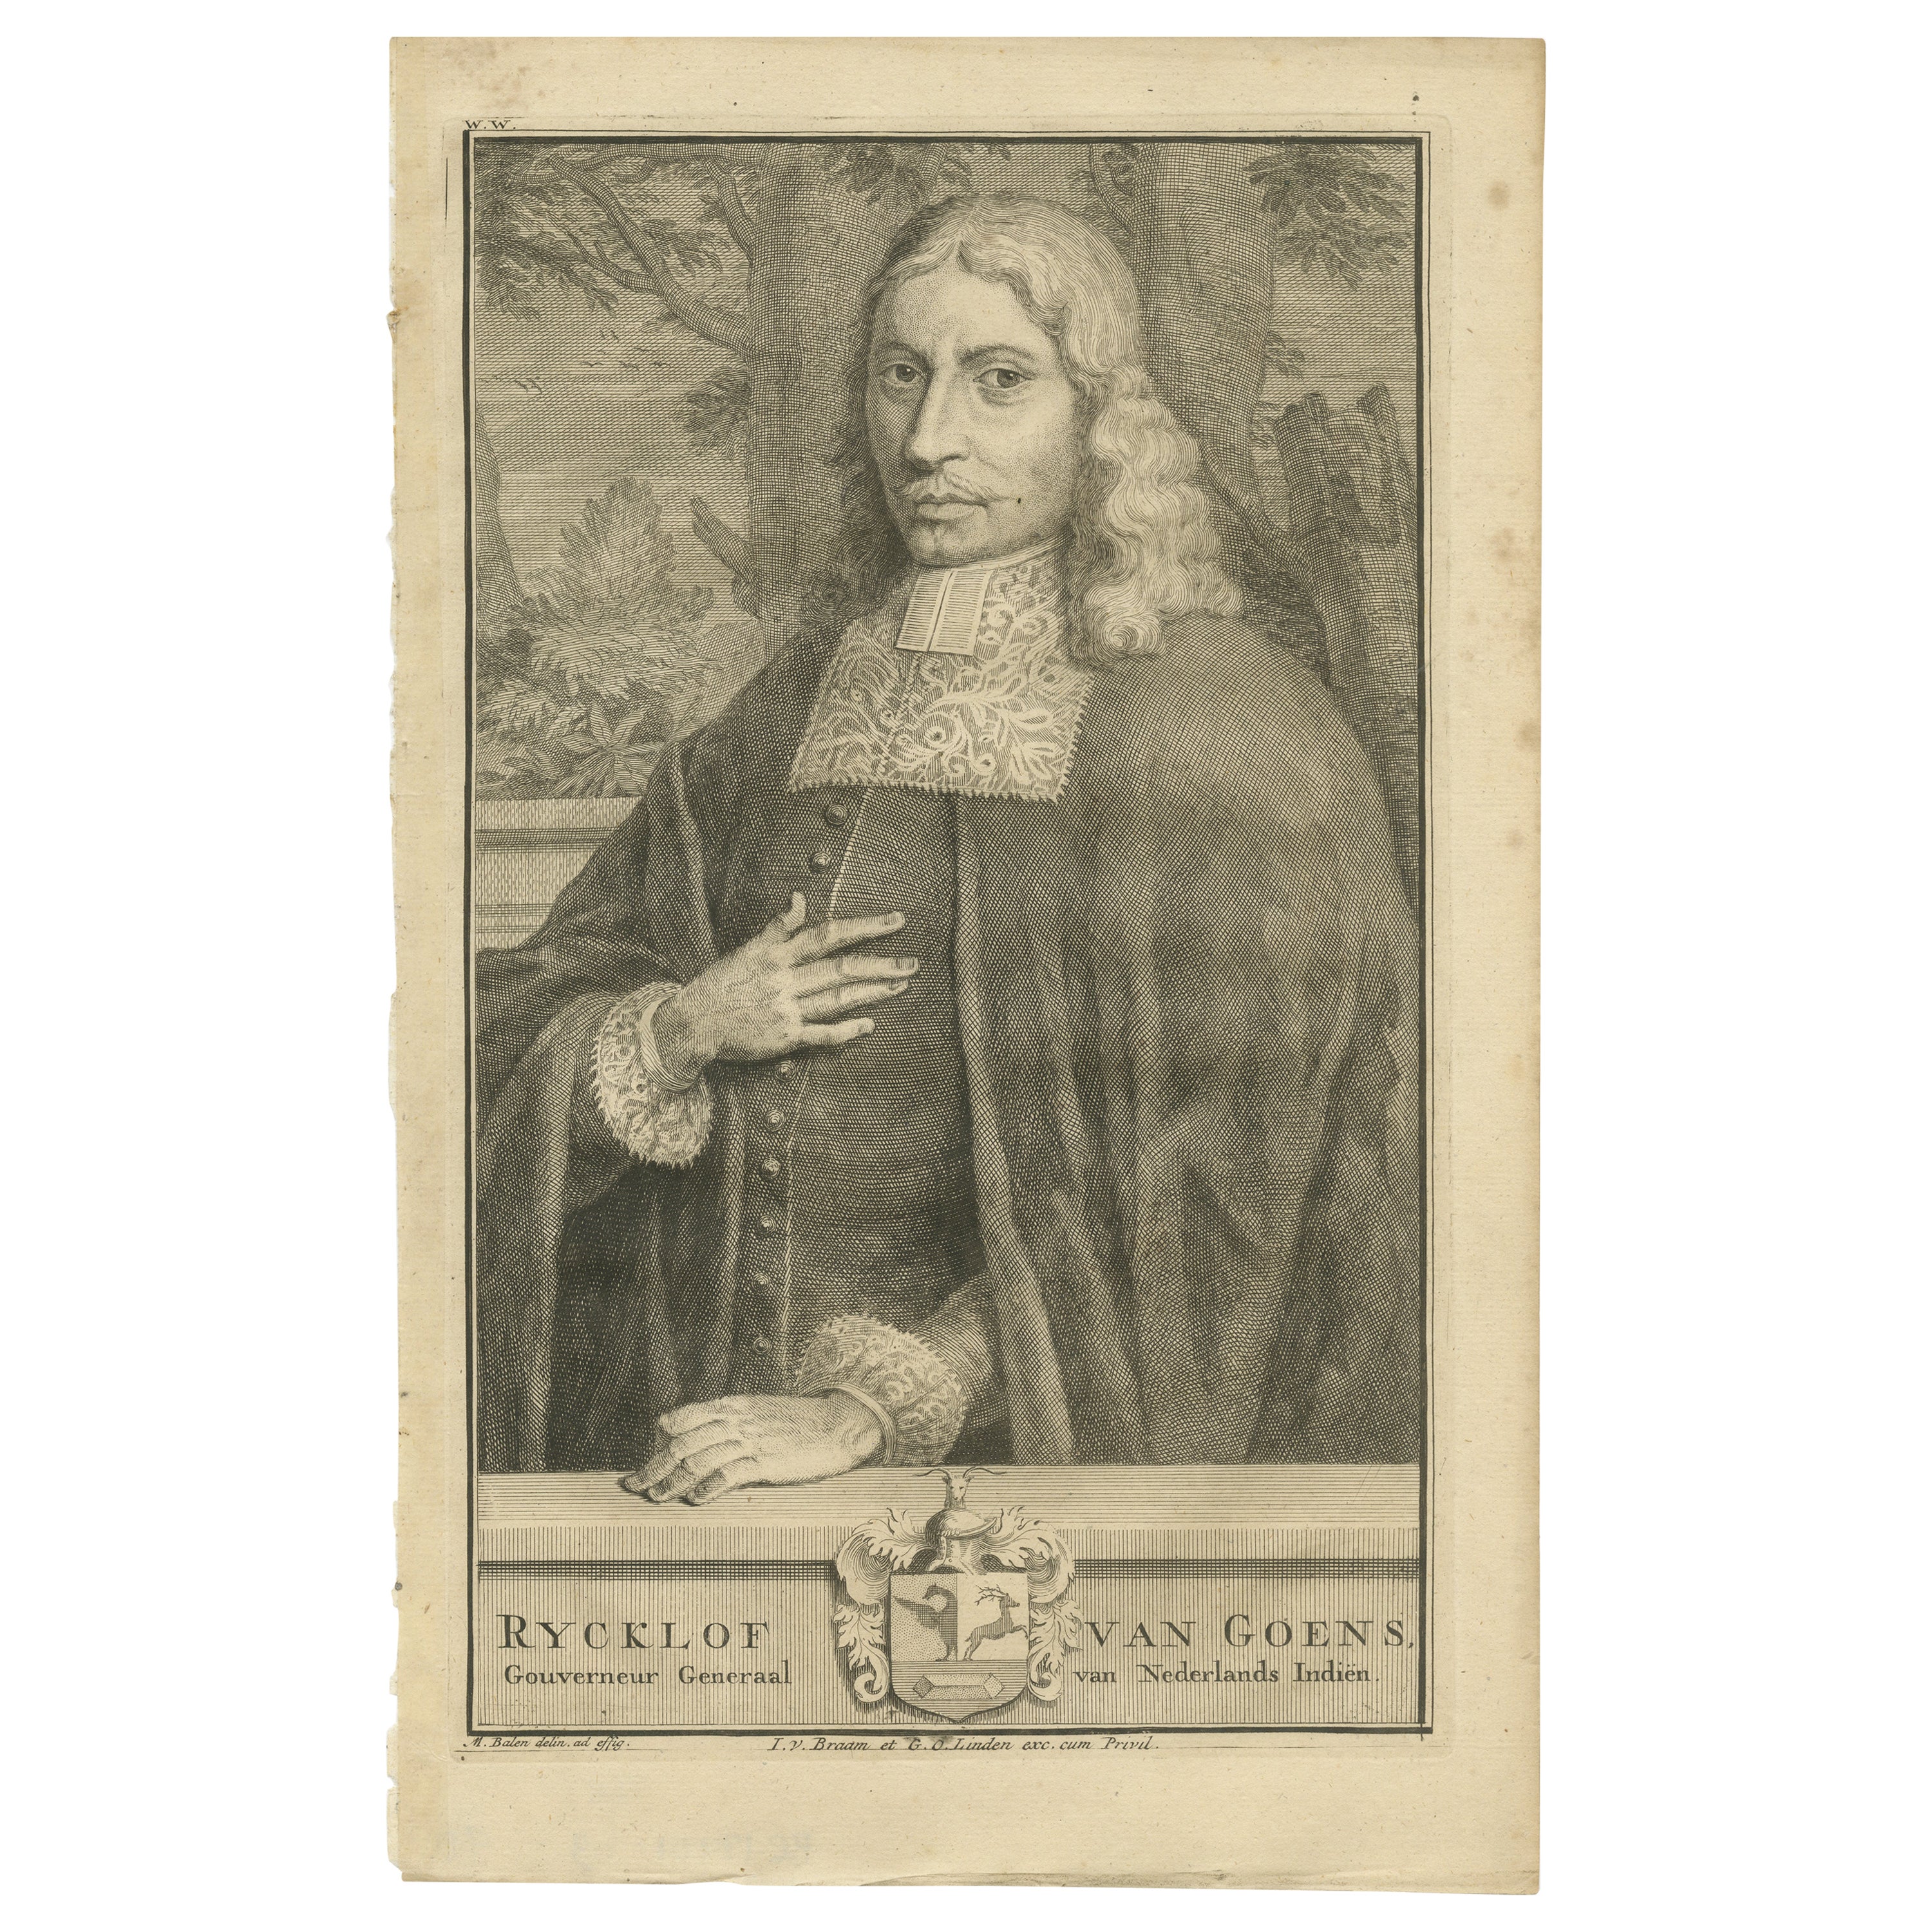 Rycklof van Goens: Formidable Governor-General of the VOC, Dutch East Indies